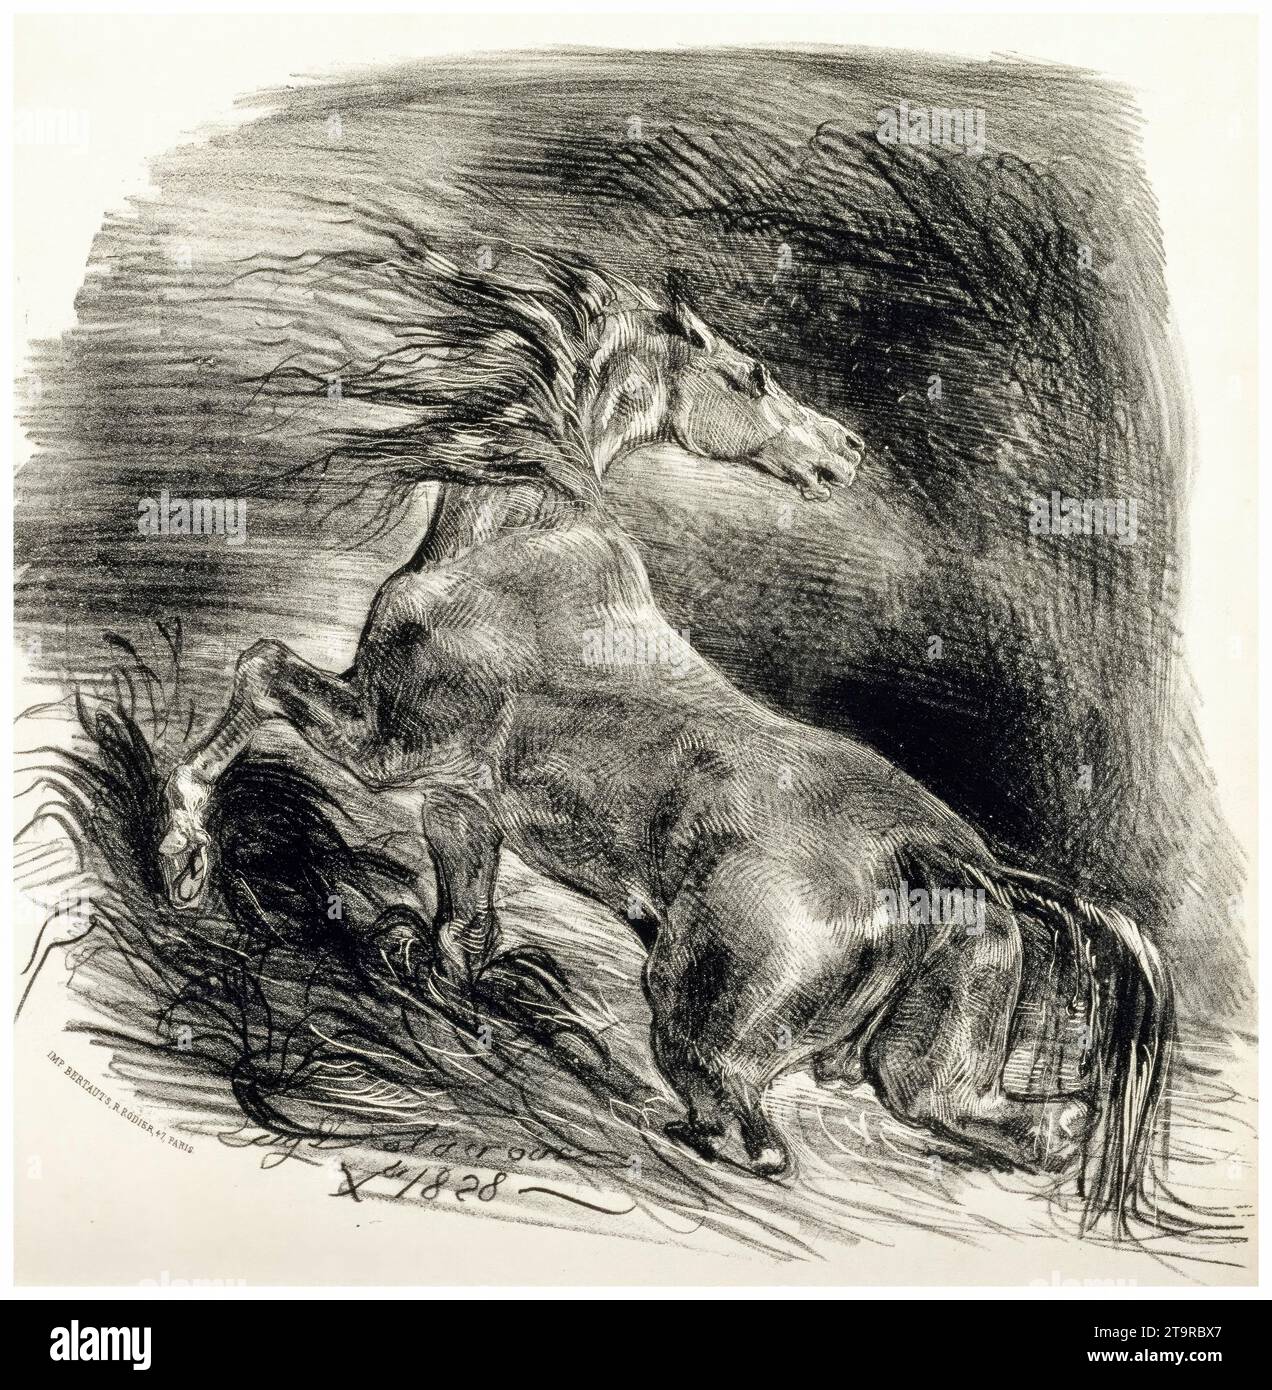 Eugene Delacroix, Cheval sauvage (Wild Horse), lithographic print, 1828 Stock Photo